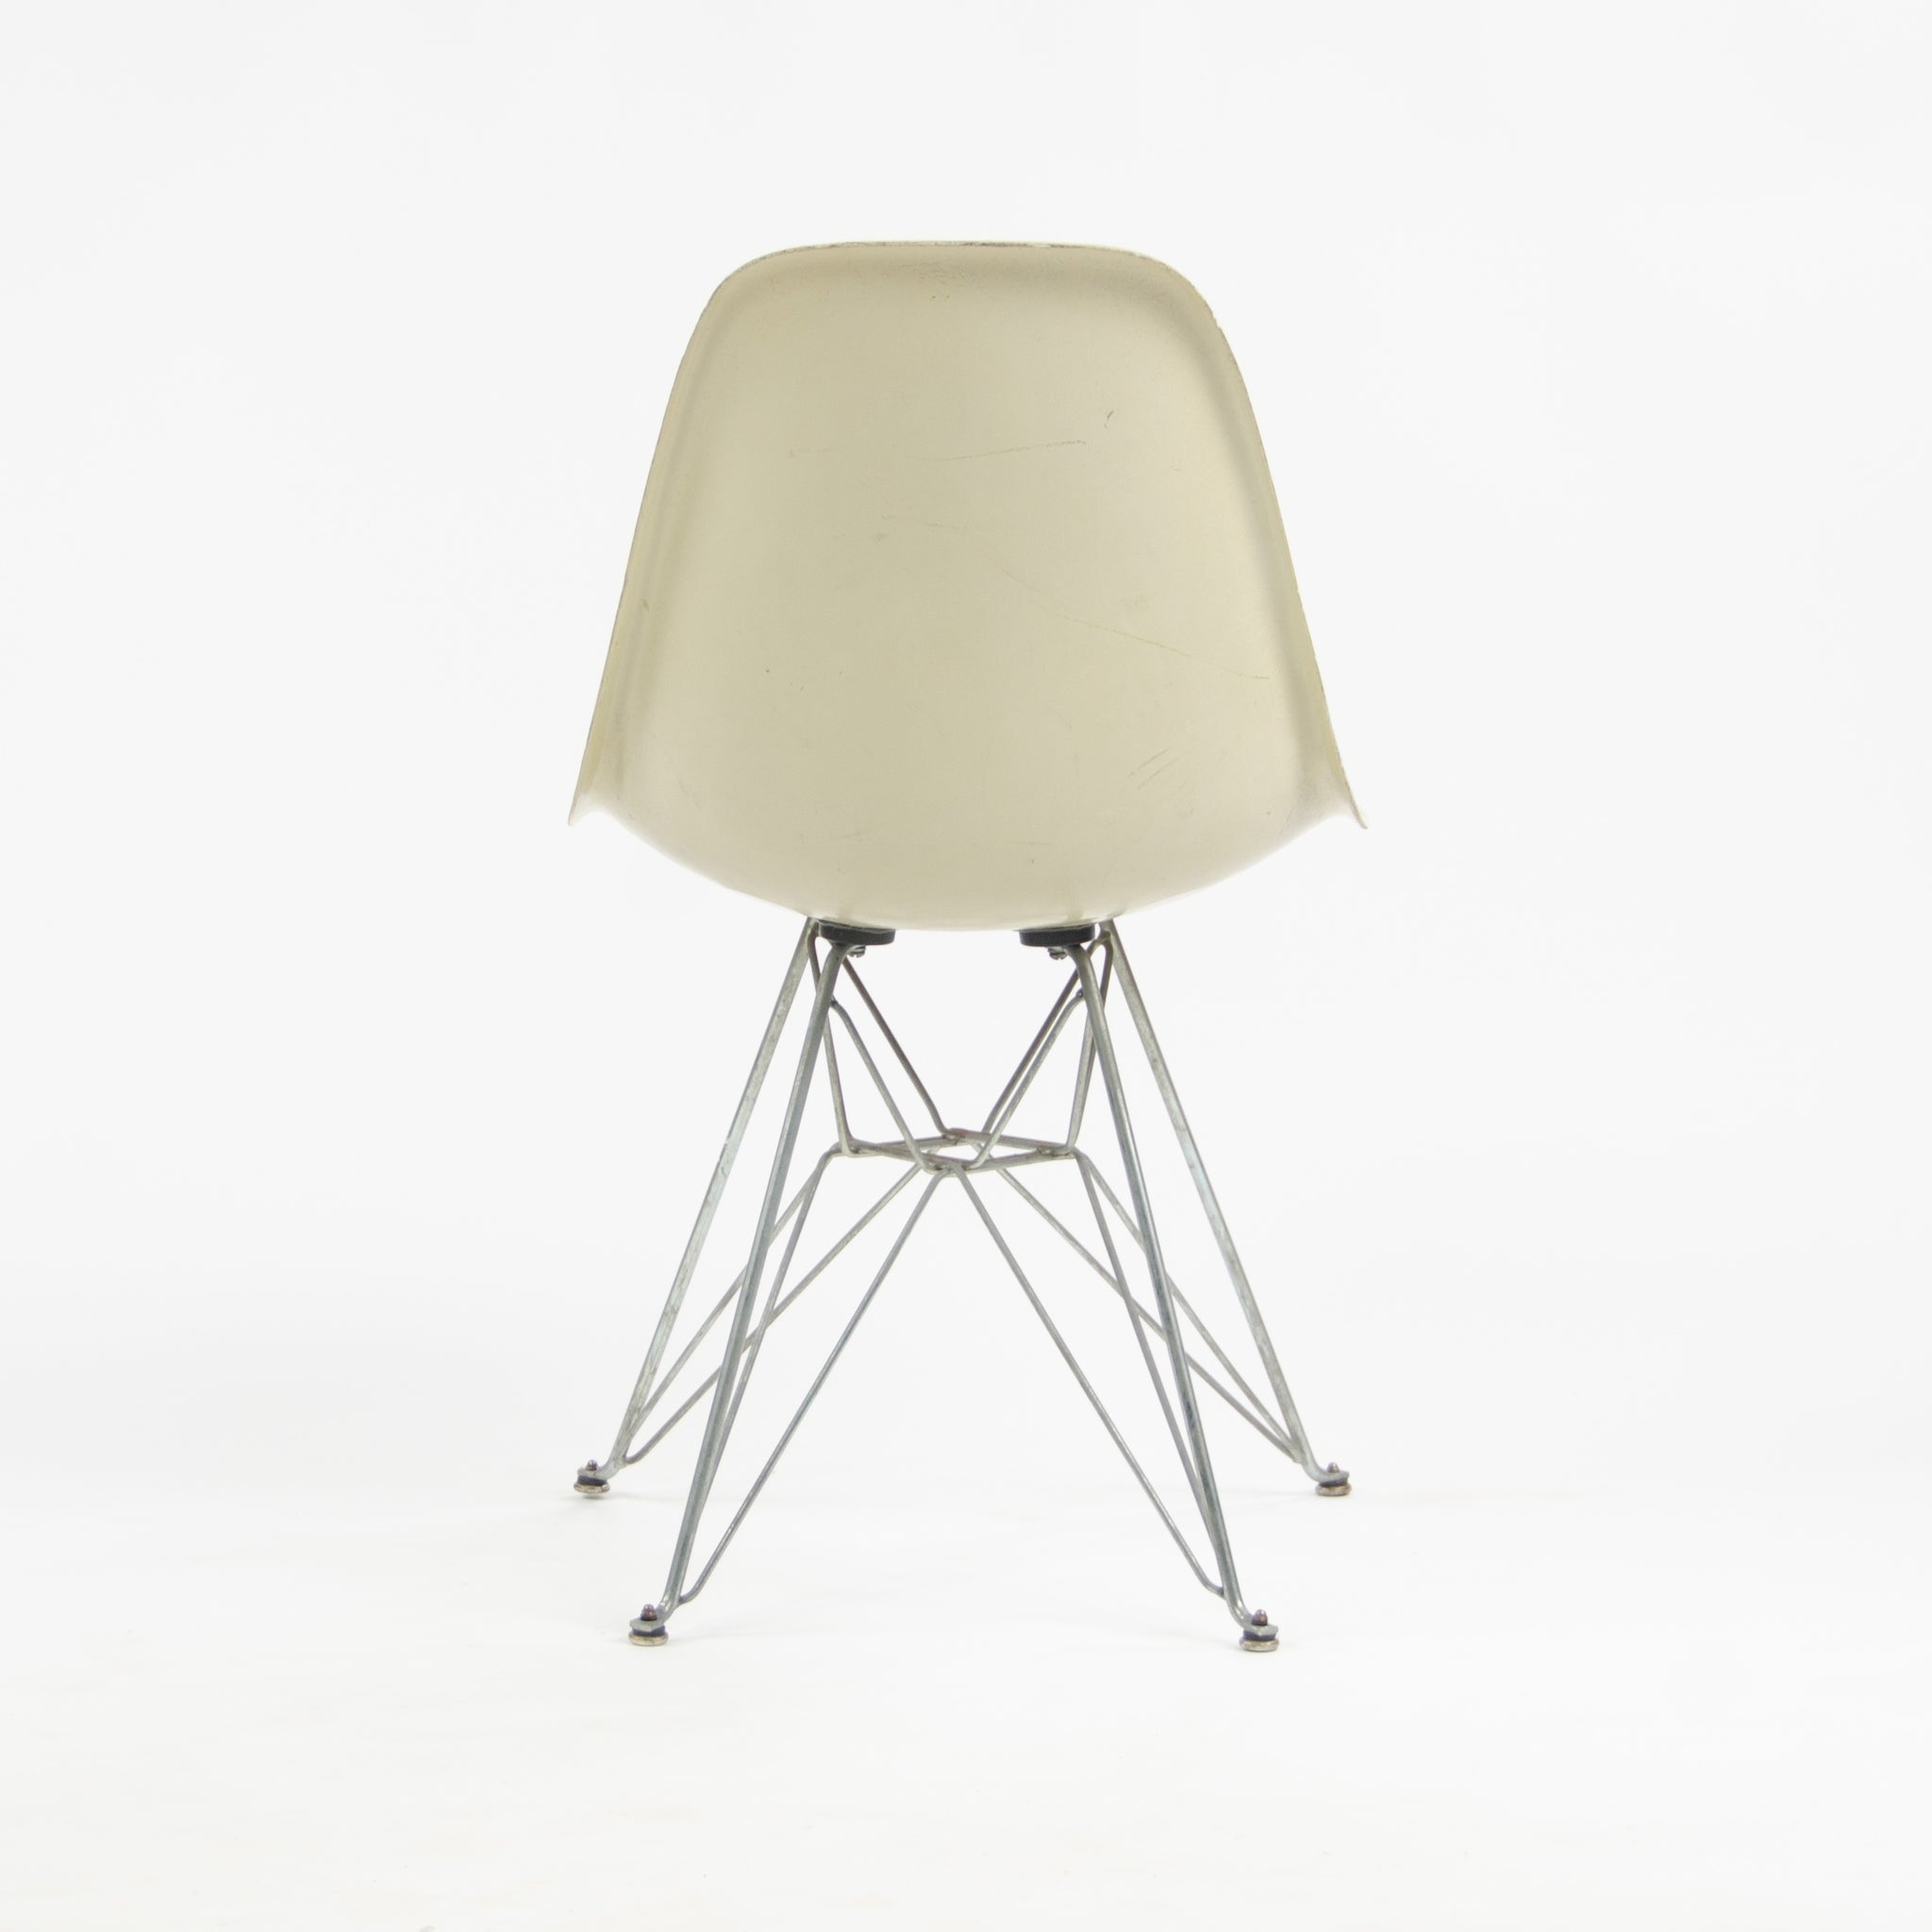 SOLD Herman Miller Eames 1951 Fiberglass Side Shell Chair Ivory Eiffel Tower Base DKR